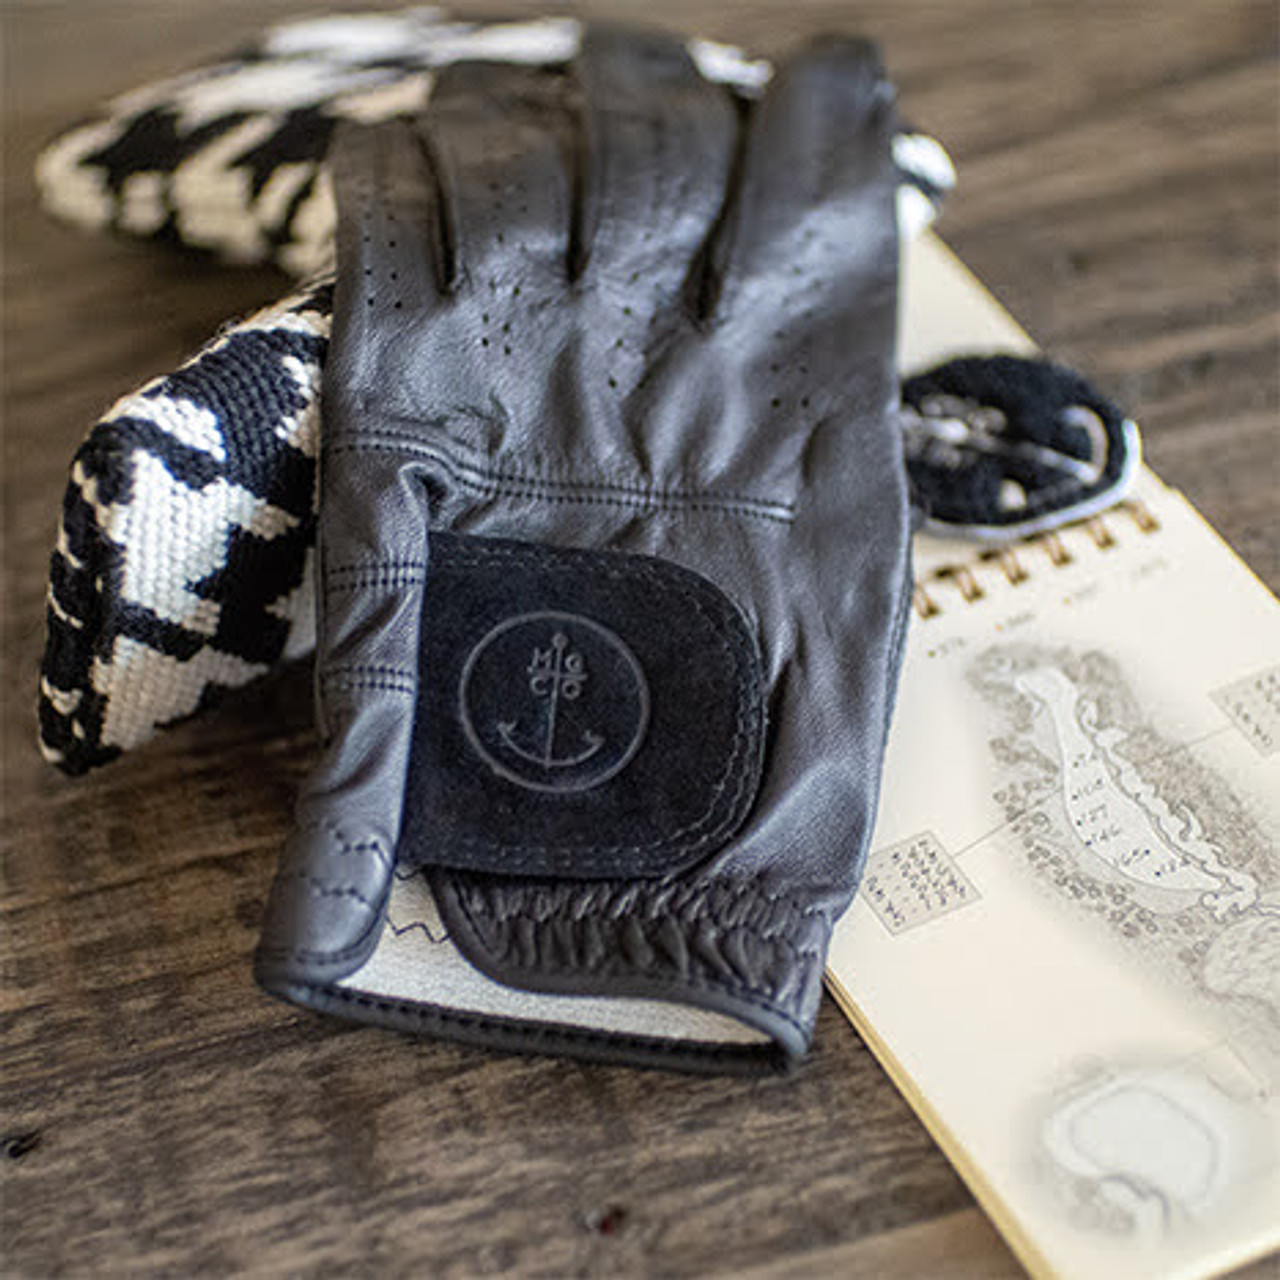 Orlimar Men's Tour Cabretta Leather Golf Gloves (3-Pack) – Off-Price Golf